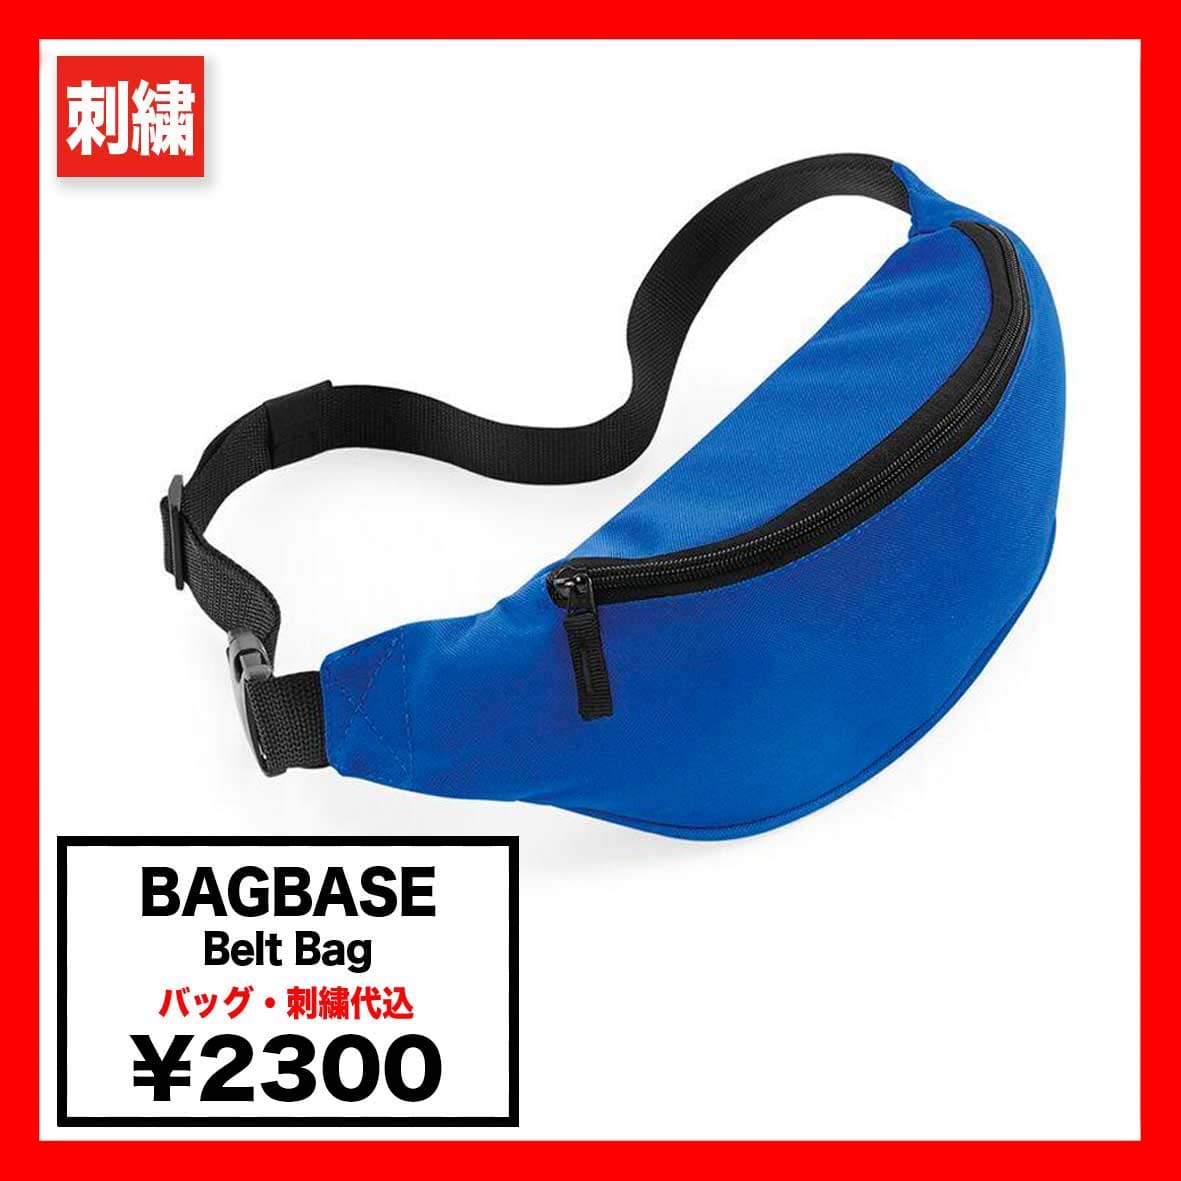 BAGBASE バッグベース Belt Bag (品番BG042)